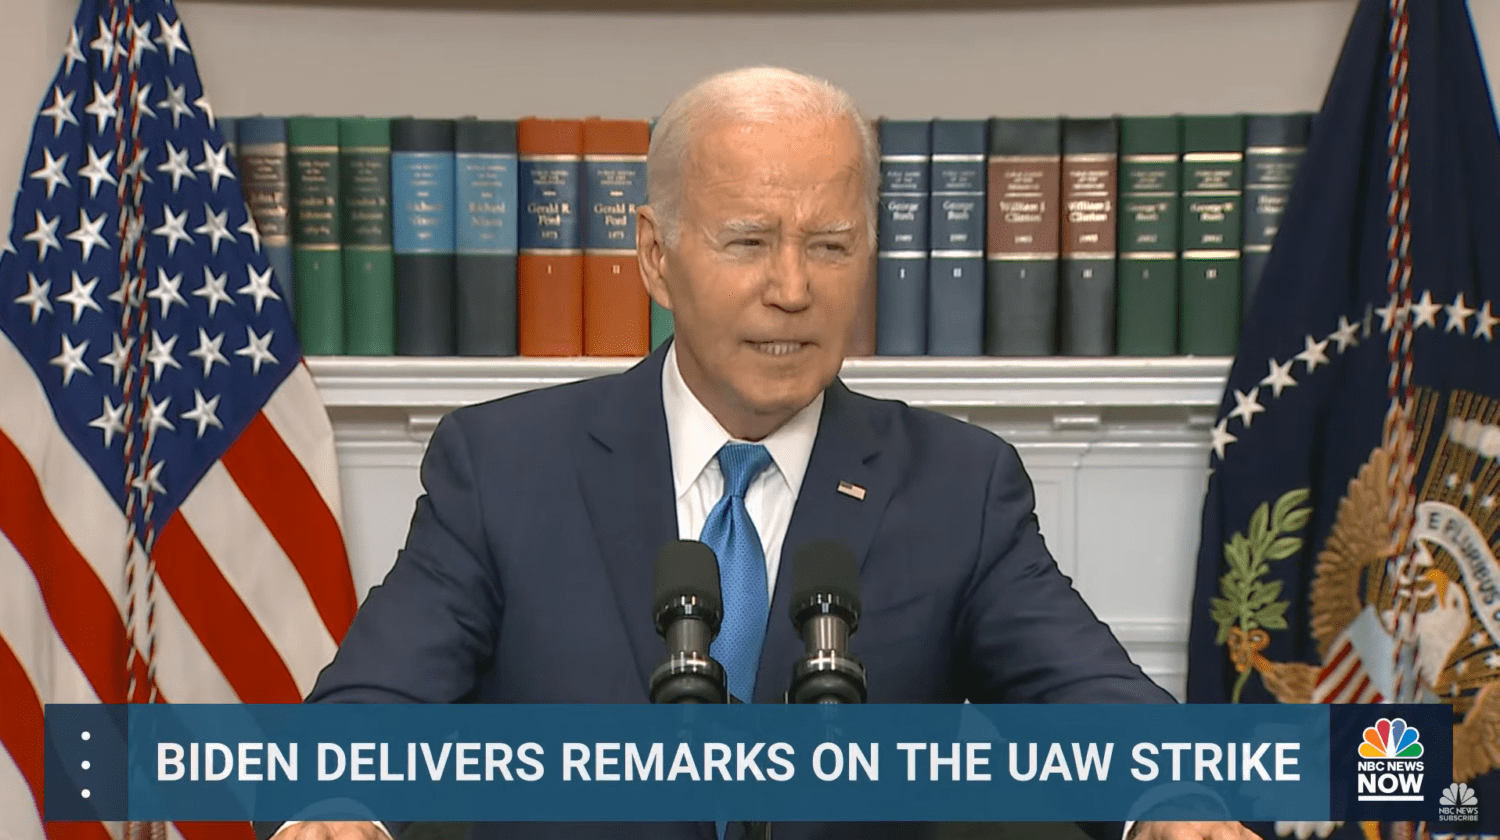 President Biden addresses the UAW's landmark strike against Detroit's Big Three, urging continued negotiations and understanding.